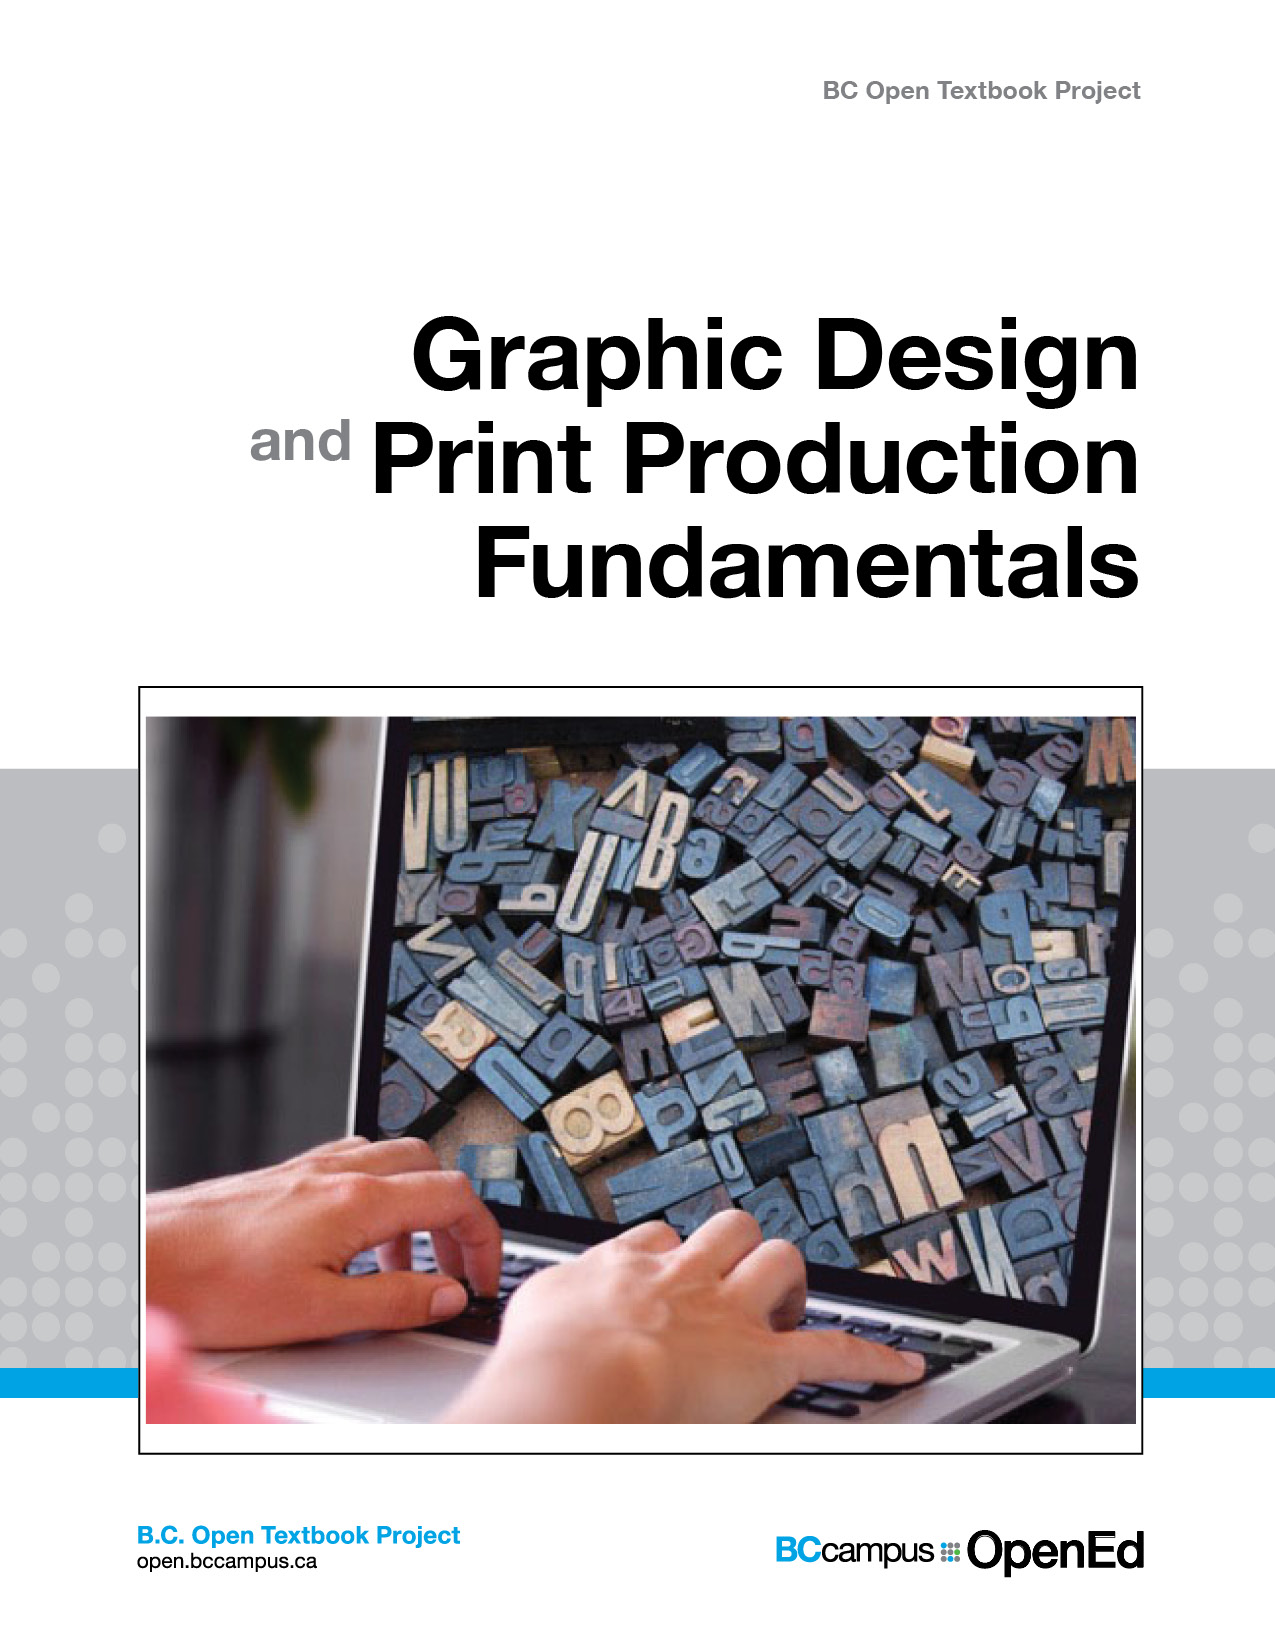 Graphic Design Fundamentals - Textbook Library